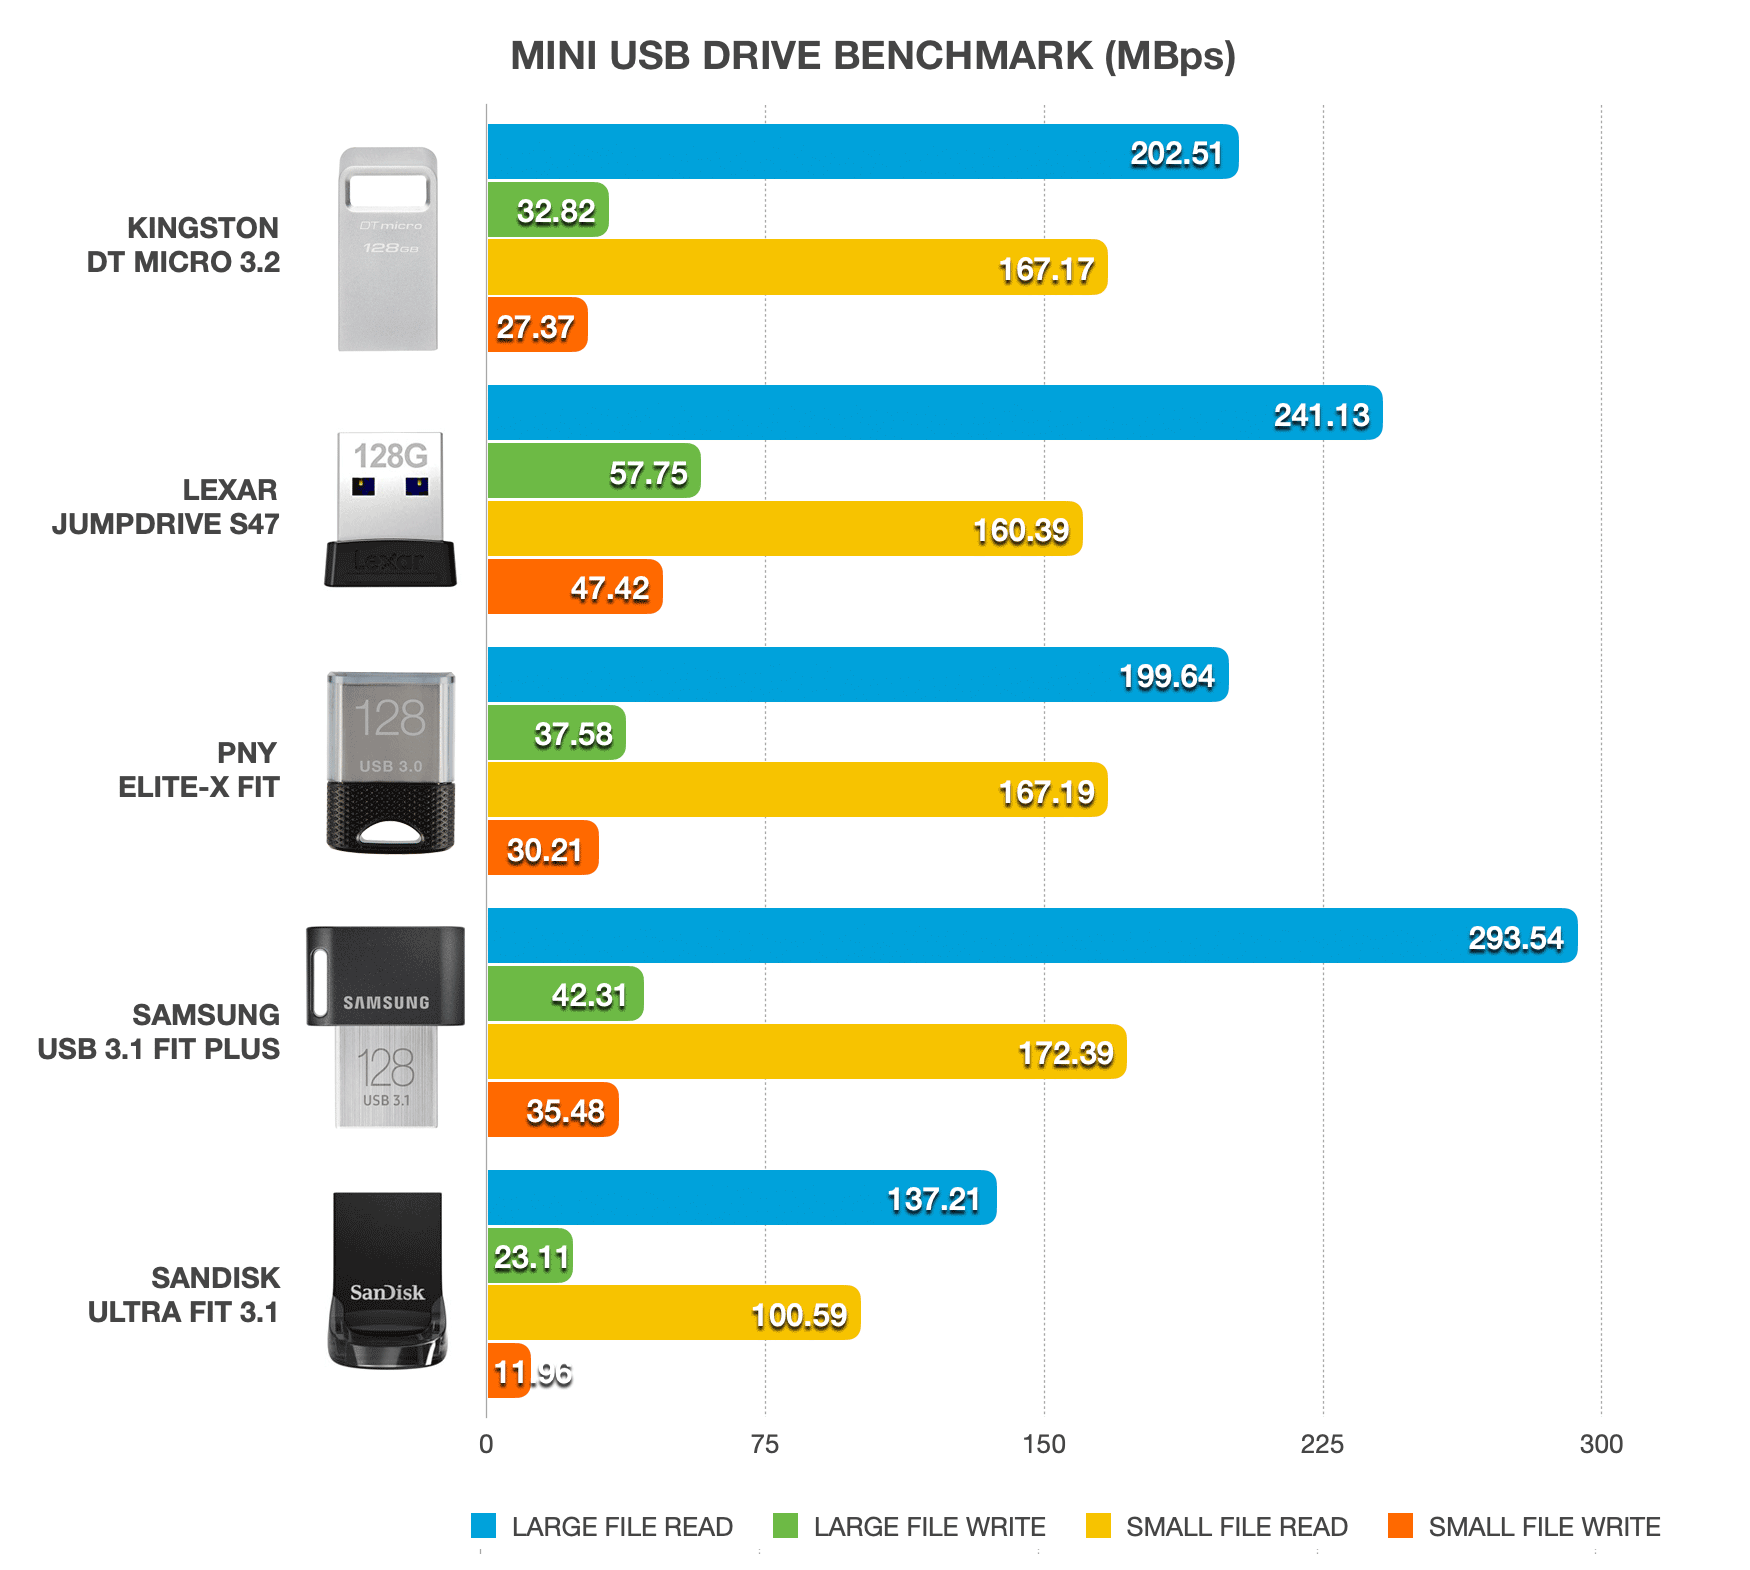 Bar chart comparing USB speeds between Kingston DataTraveler Micro, Lexar JumpDrive S47, PNY Elite-X Fit, Samsung Fit Plus, and Sandisk Ultra Fit 3.1.